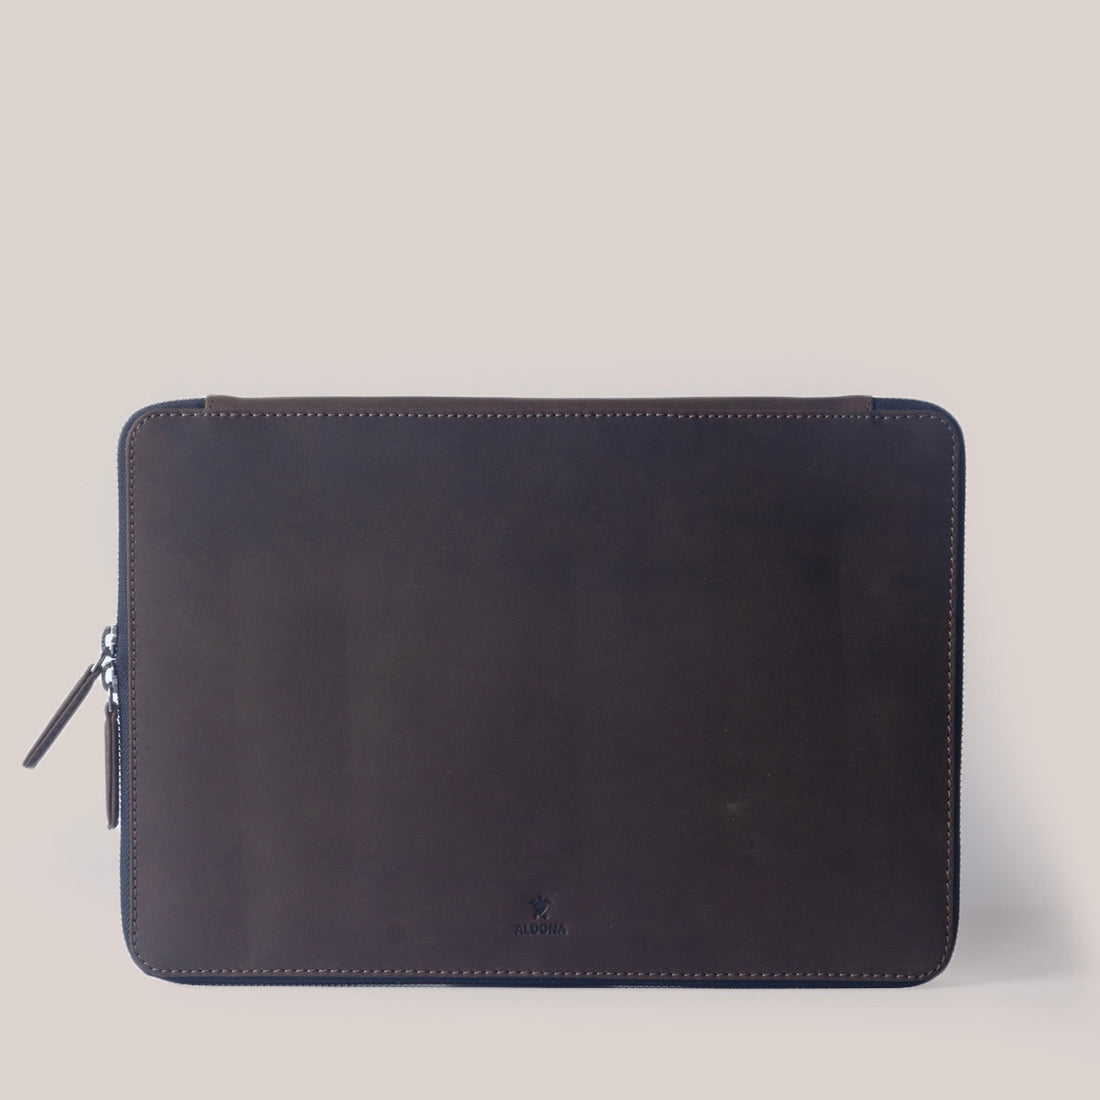 MacBook Zippered Laptop Case - Burnt Tobacco